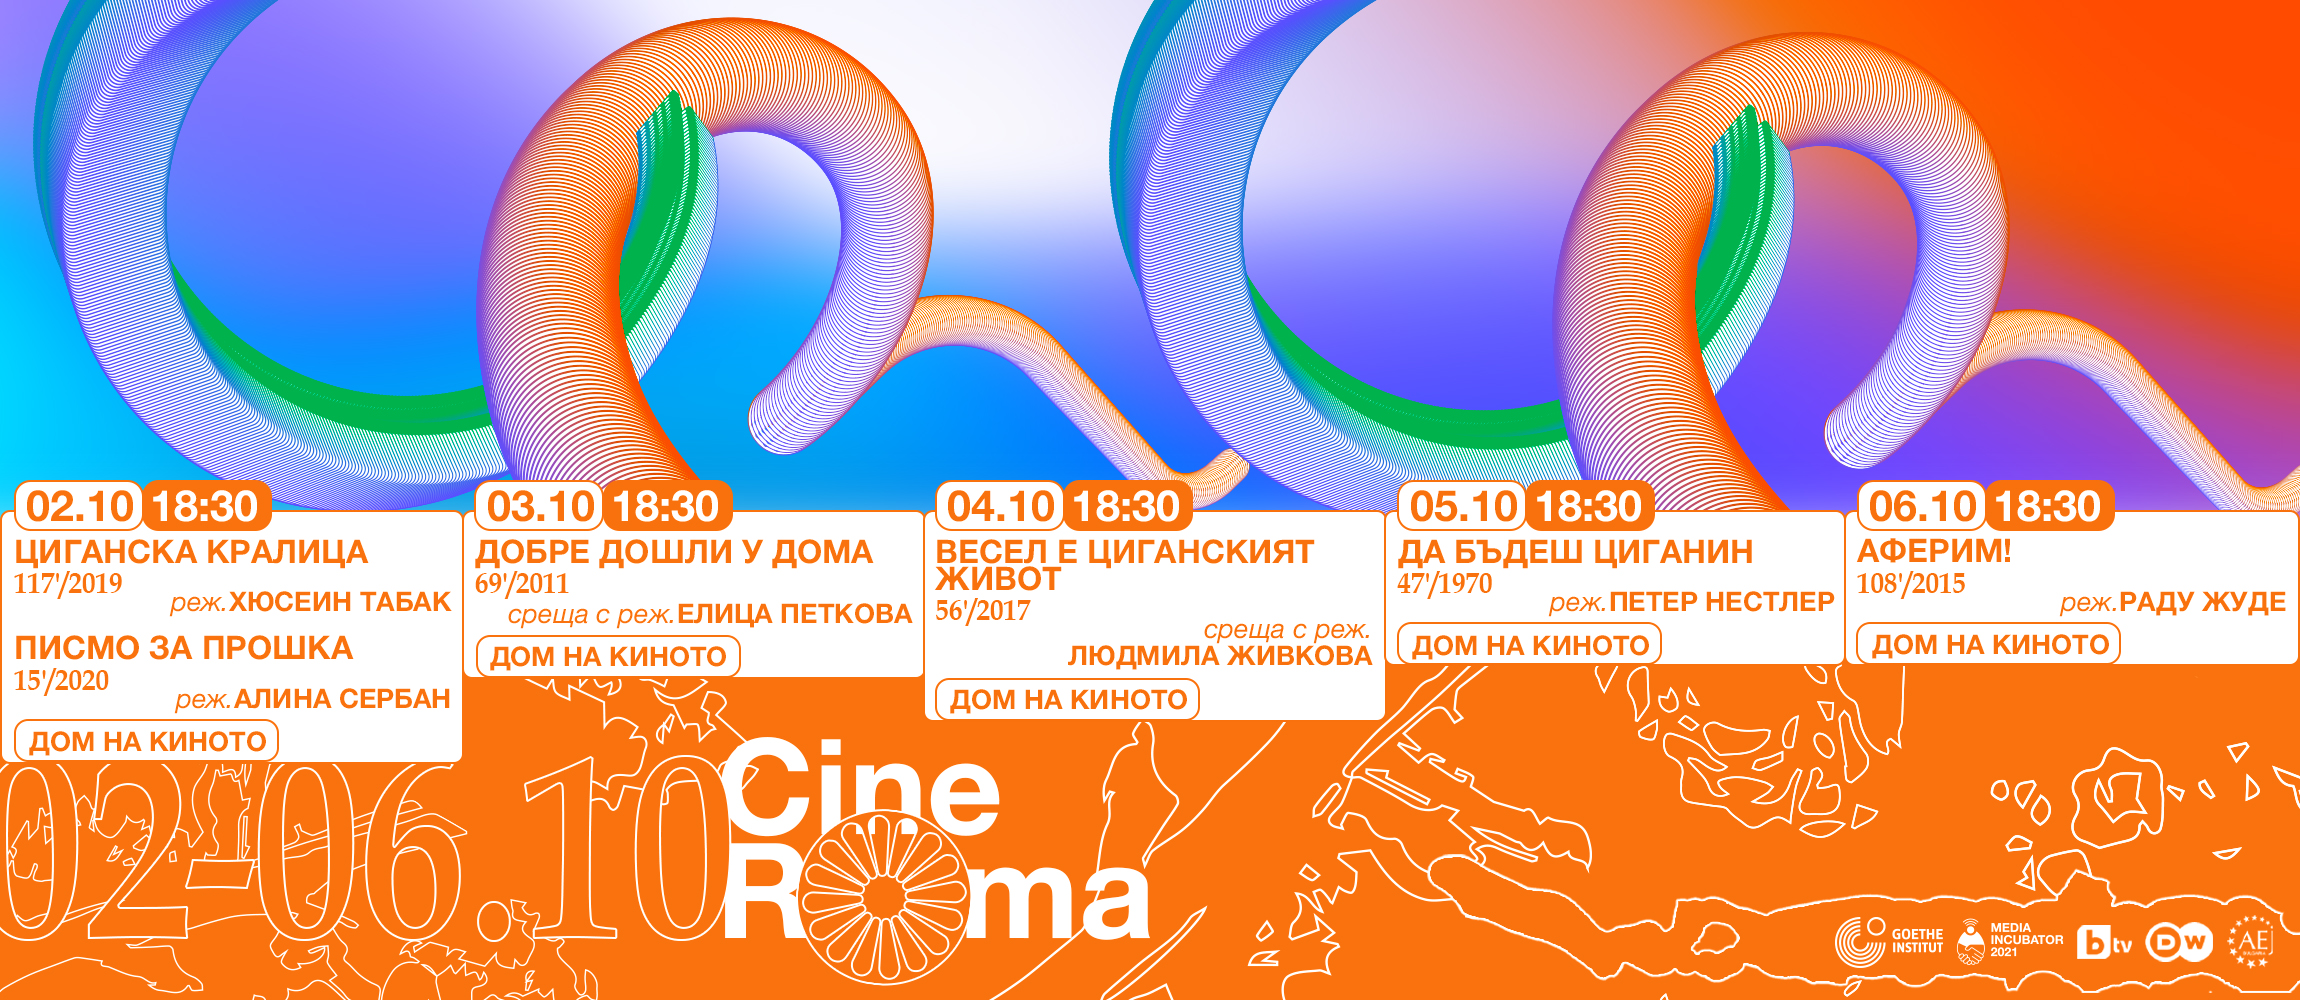  Програмната листовка на фестивала CineRoma в София 